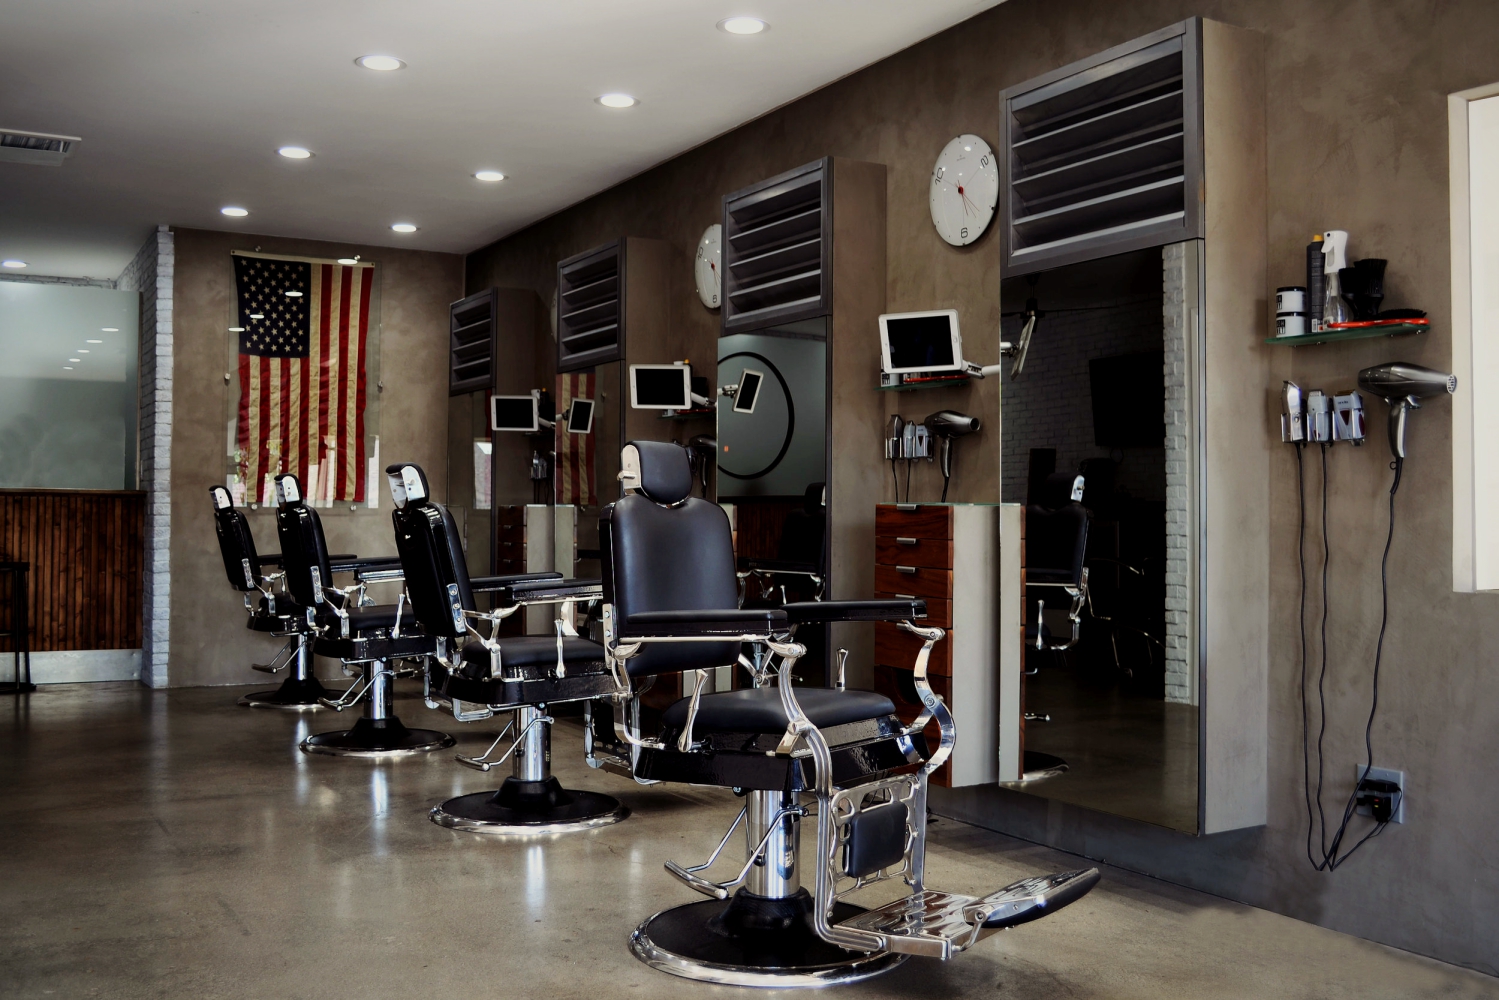 barber furniture texas, barber equipment texas